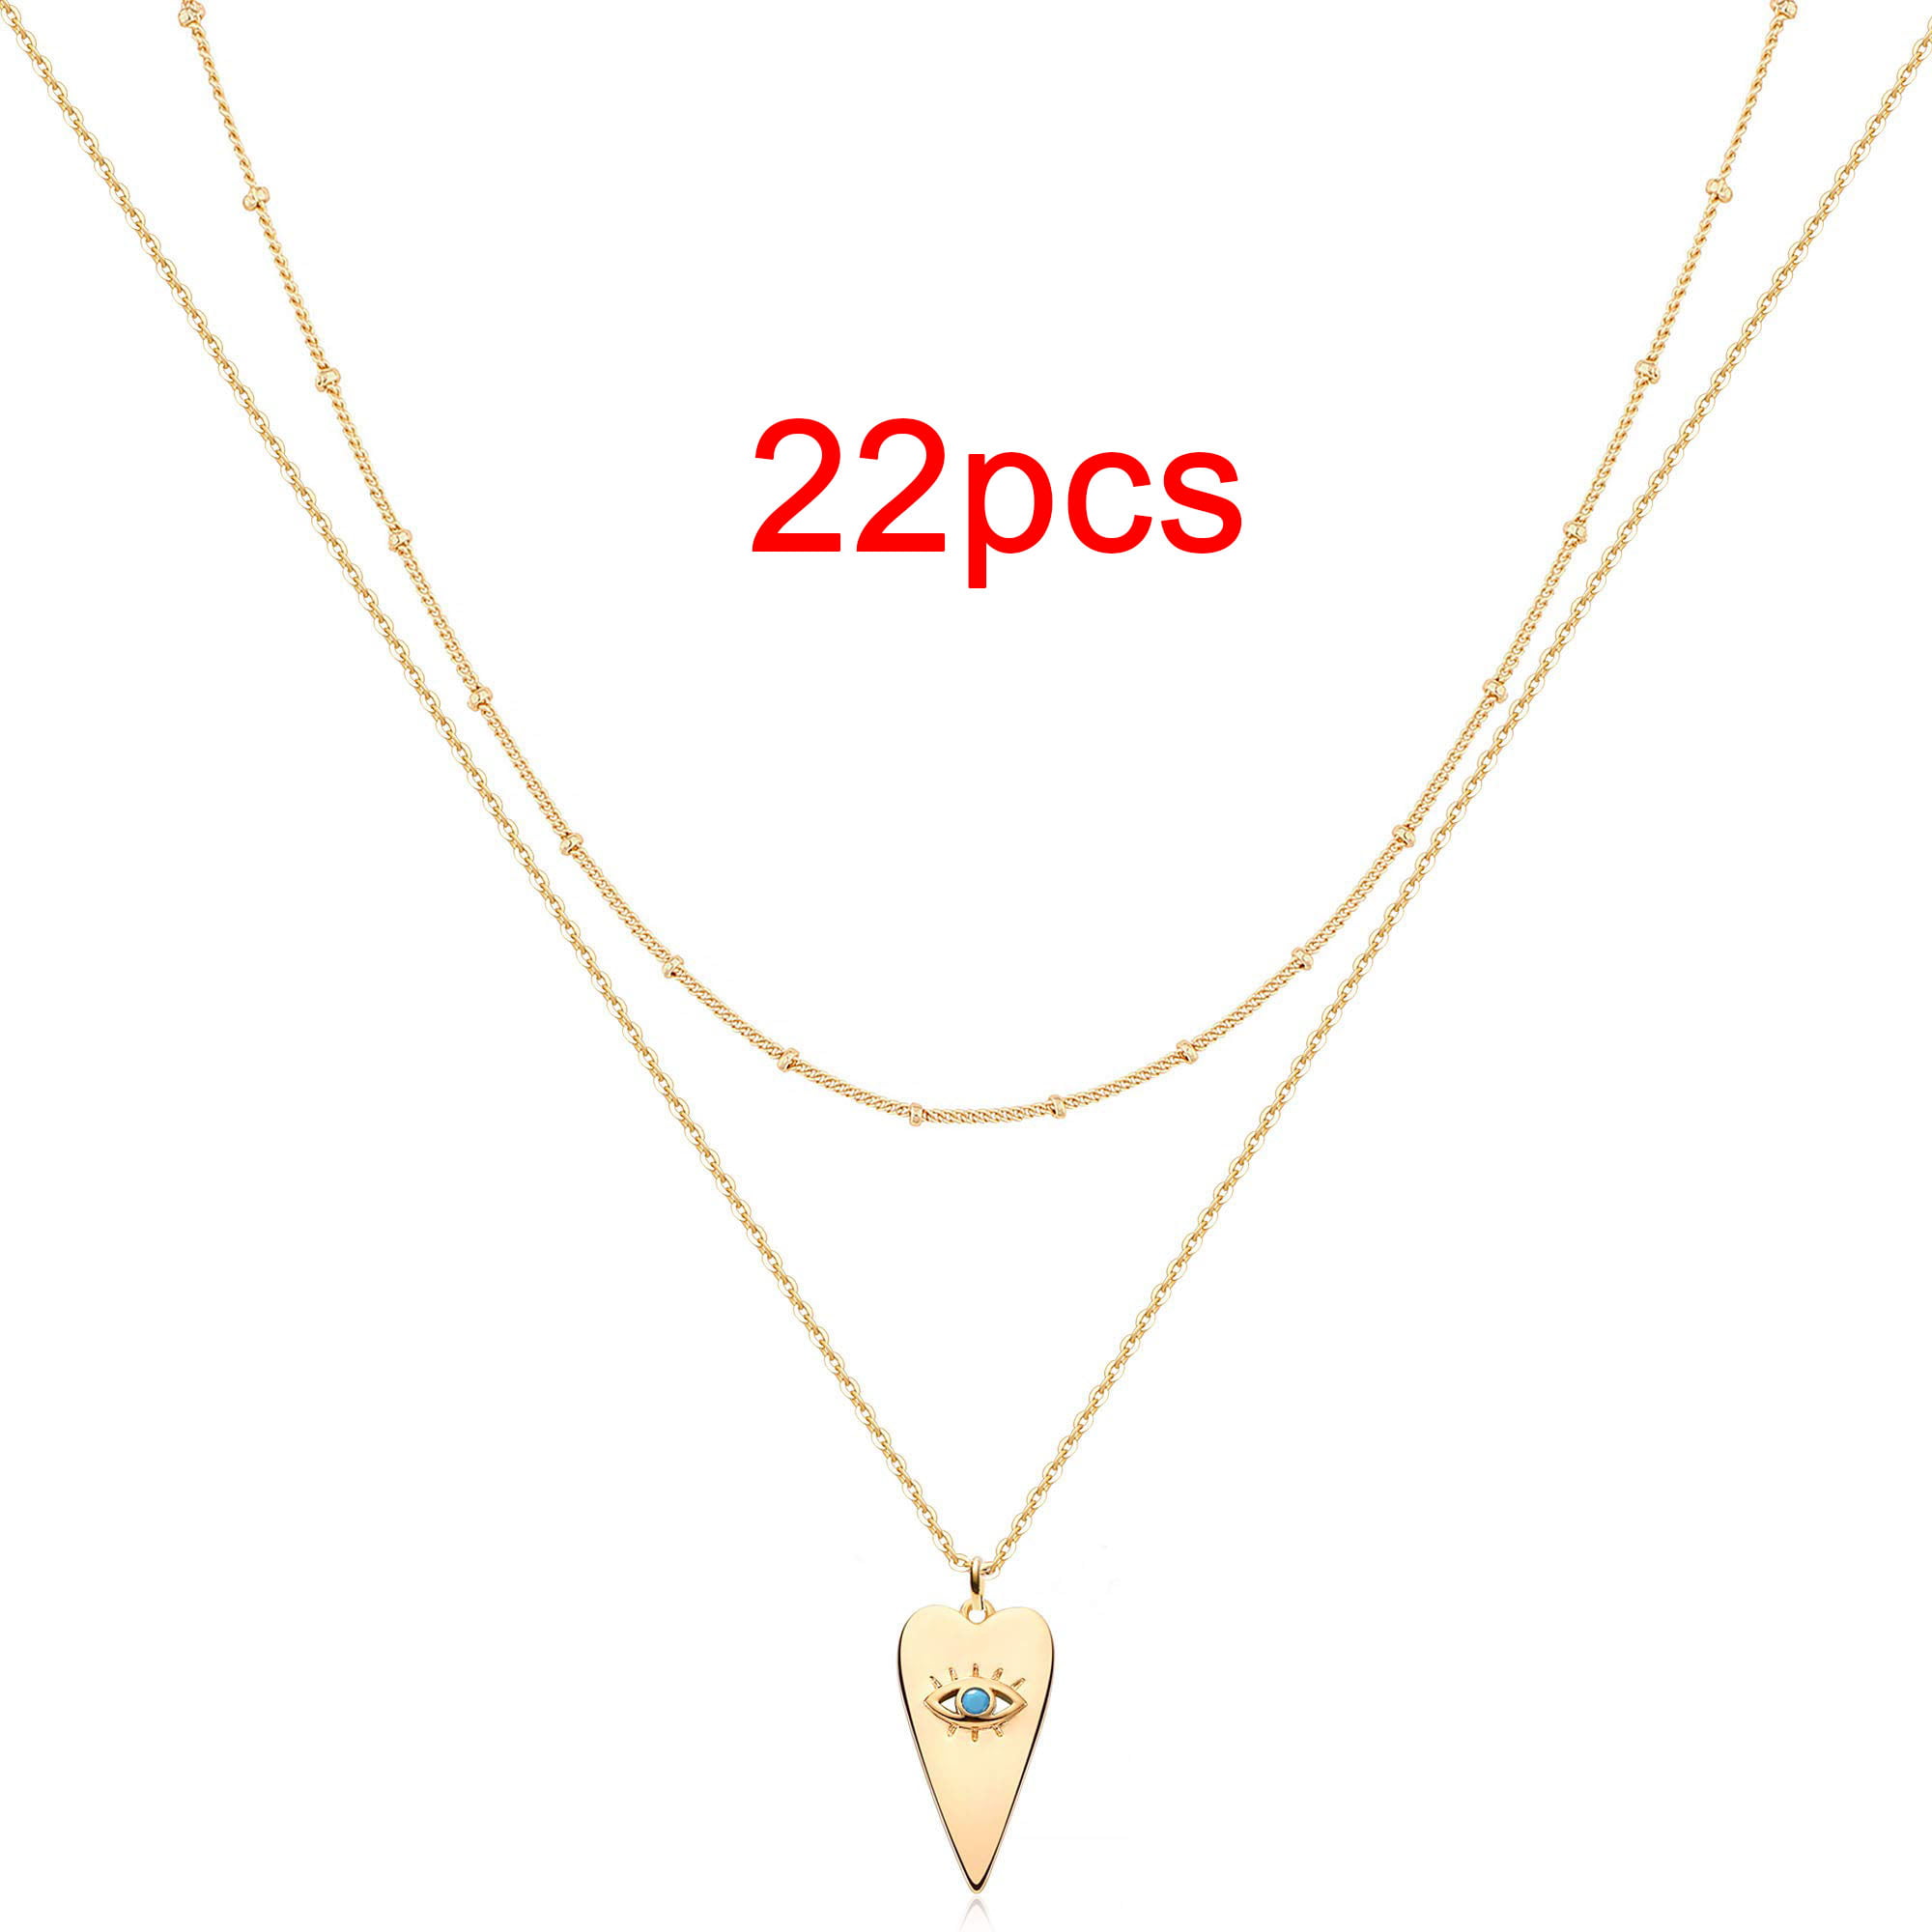 10PCS Heart Dainty Pendant Shiny Gold Enamel Pendant CZ Pave Pendant Jewelry Making Supplies